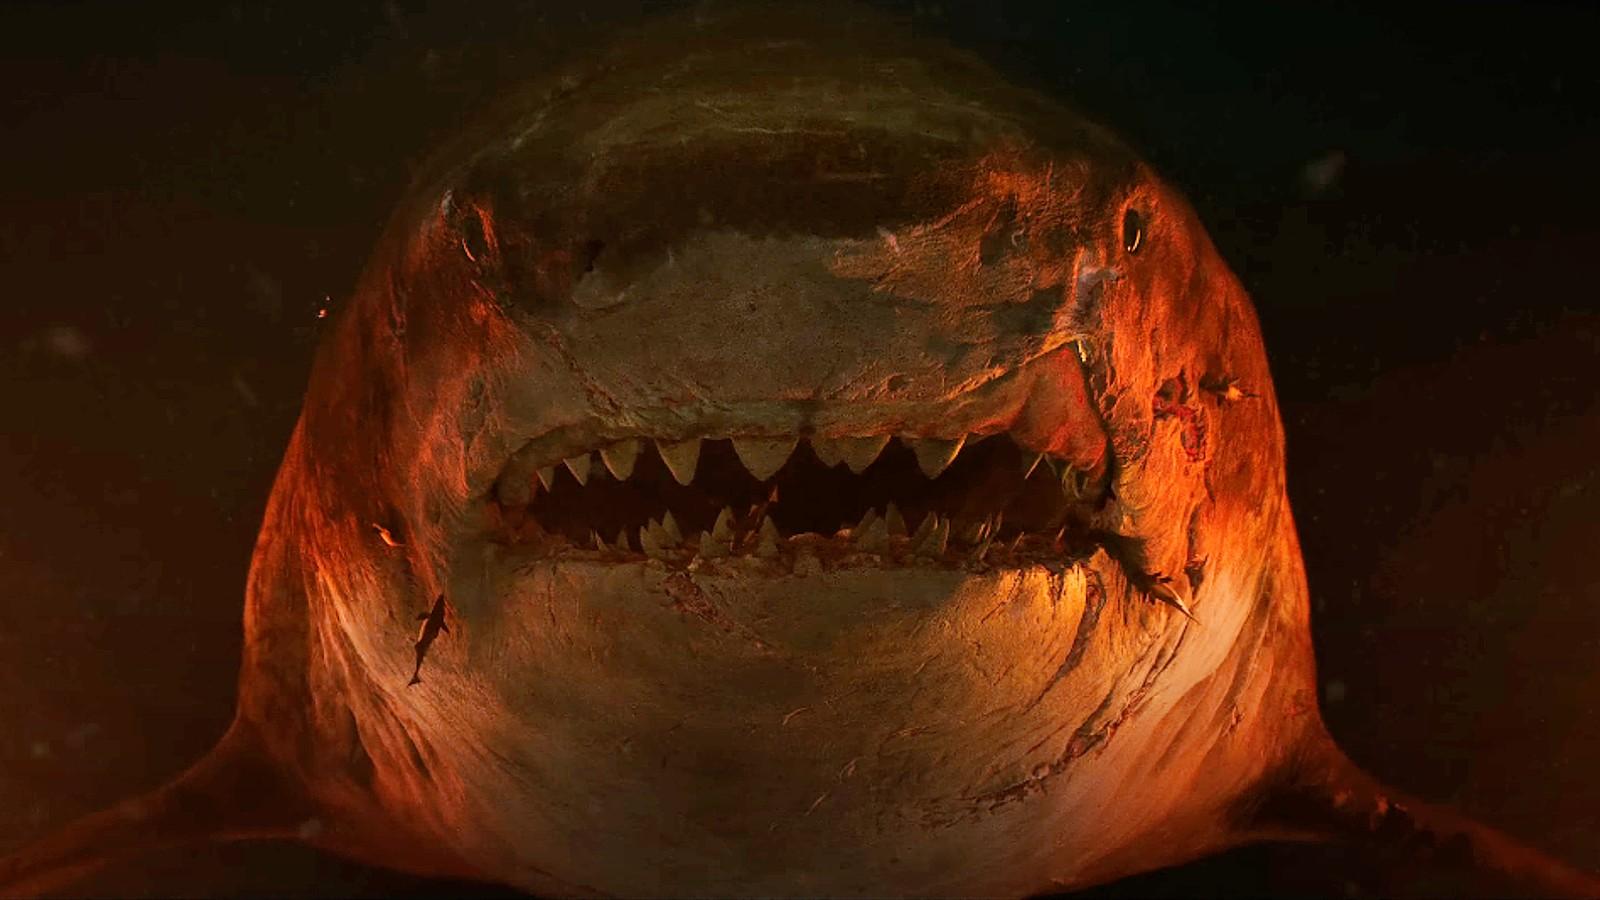 The Meg 2 trailer has Jason Statham, dinosaurs & gore - Dexerto